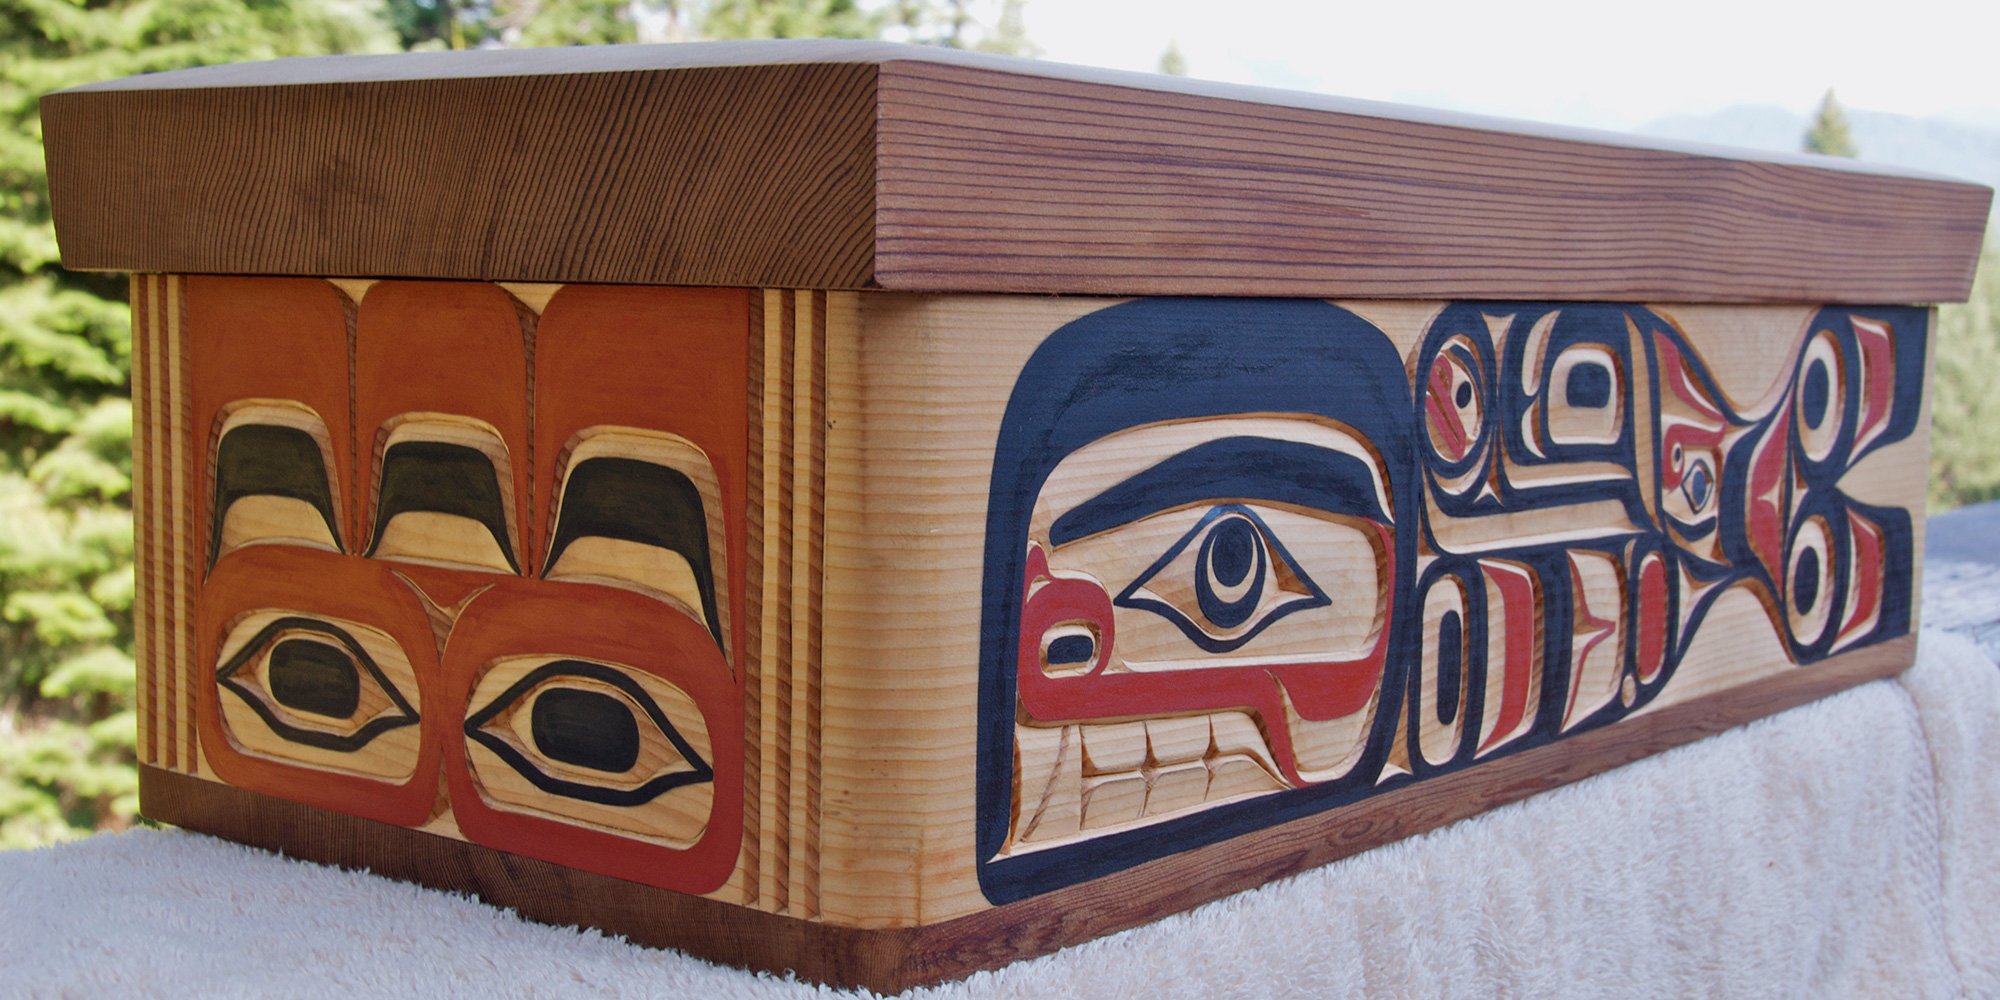 Bentwood box by Kwakwaka’wakw artist Bruce Alfred. Photo: A.Davey, Flickr